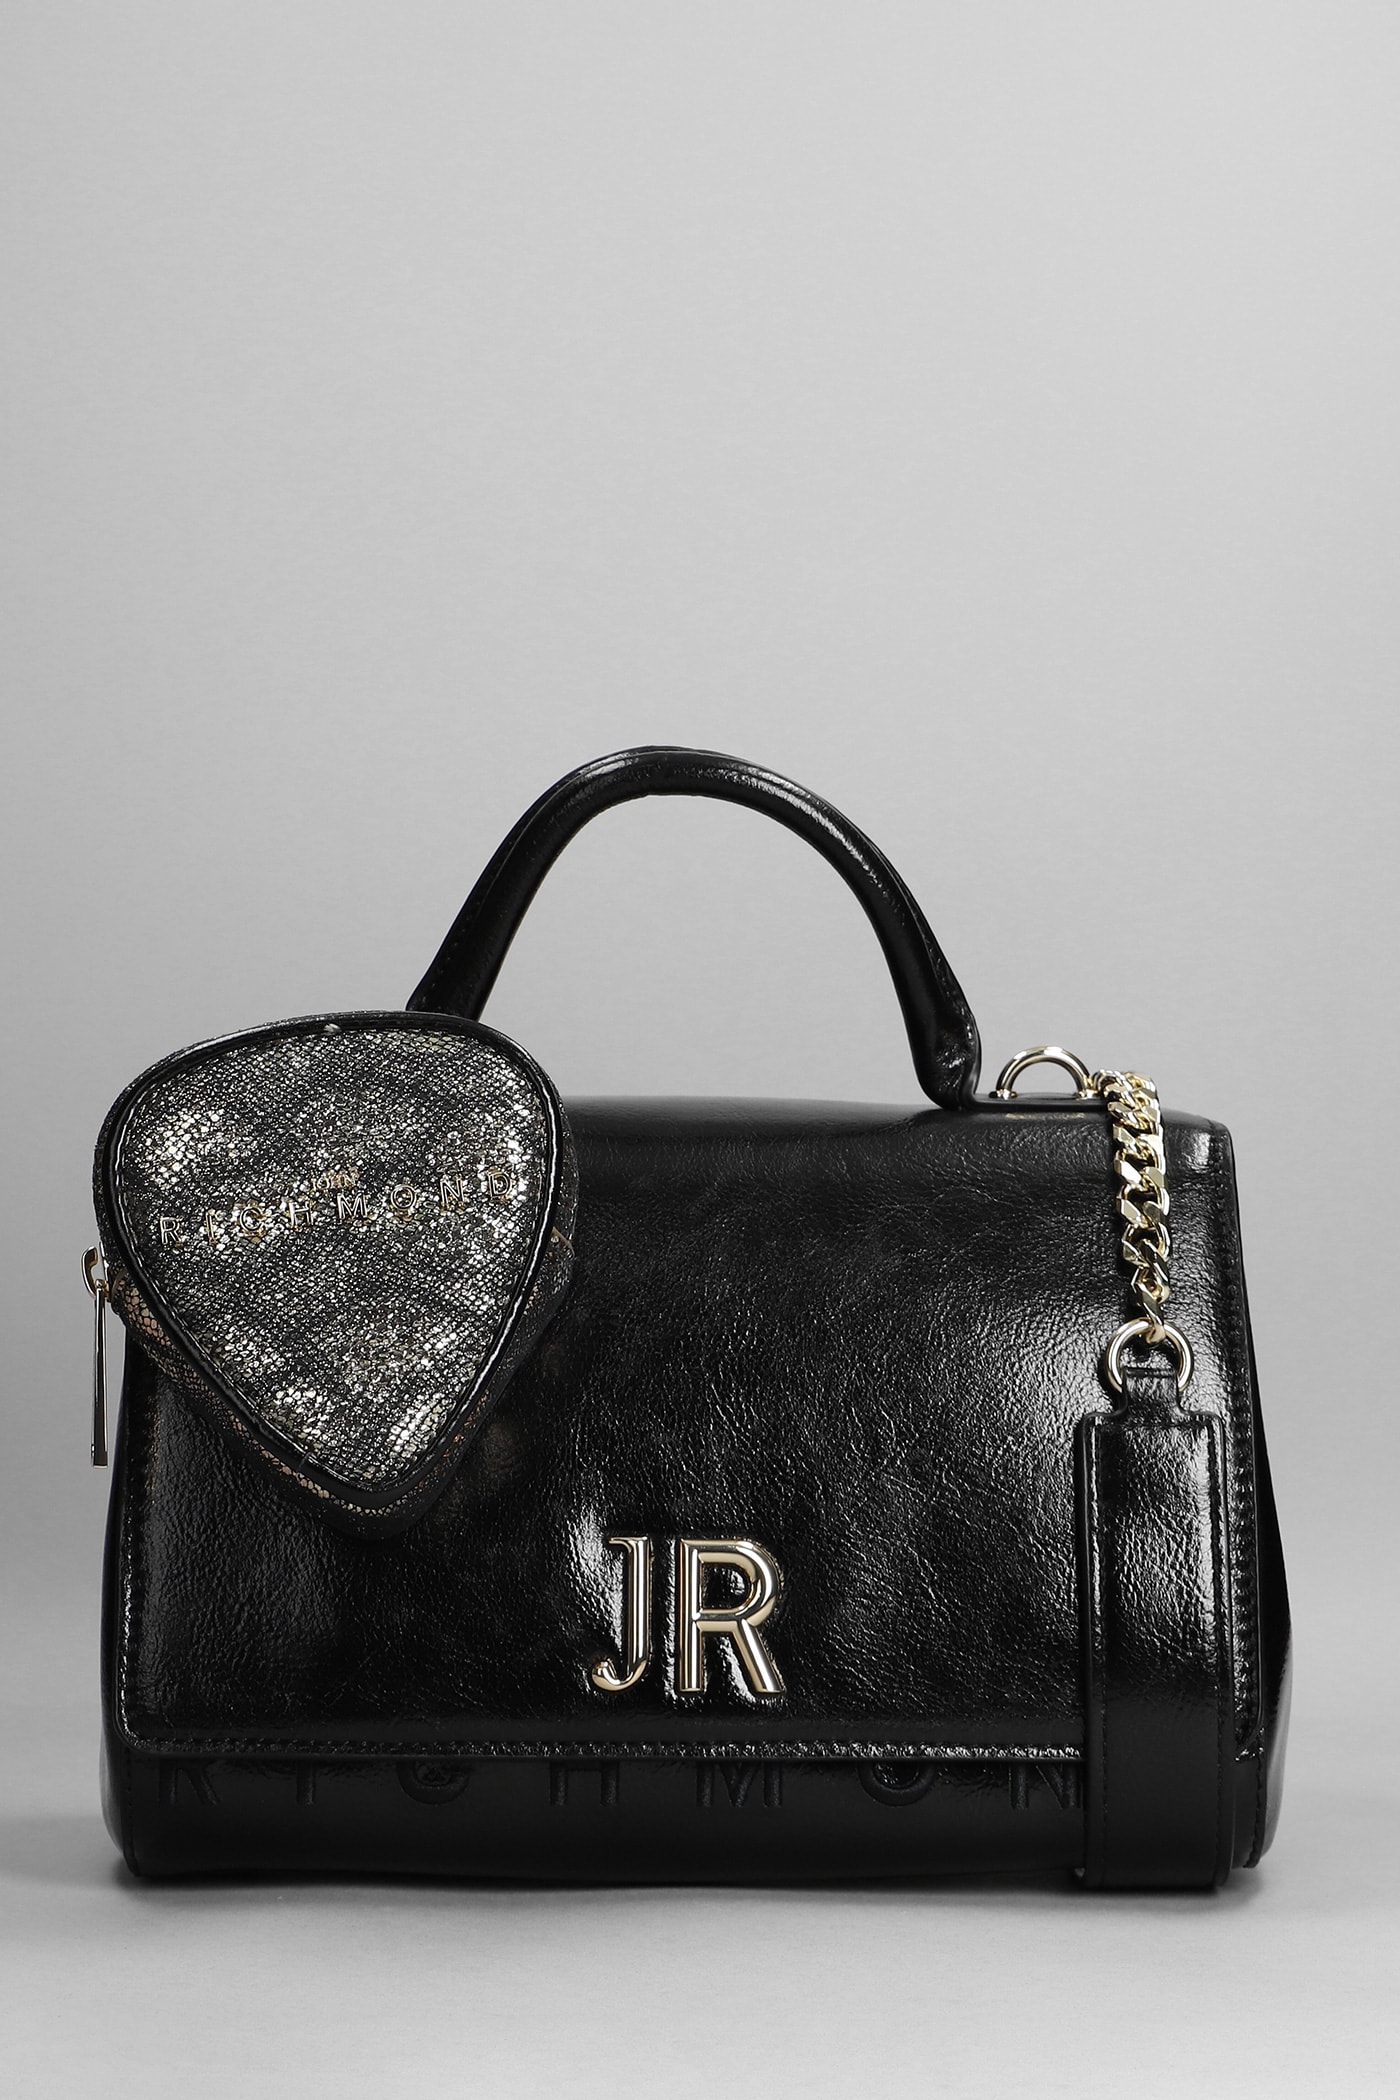 John Richmond Aruda Hand Bag In Black Leather